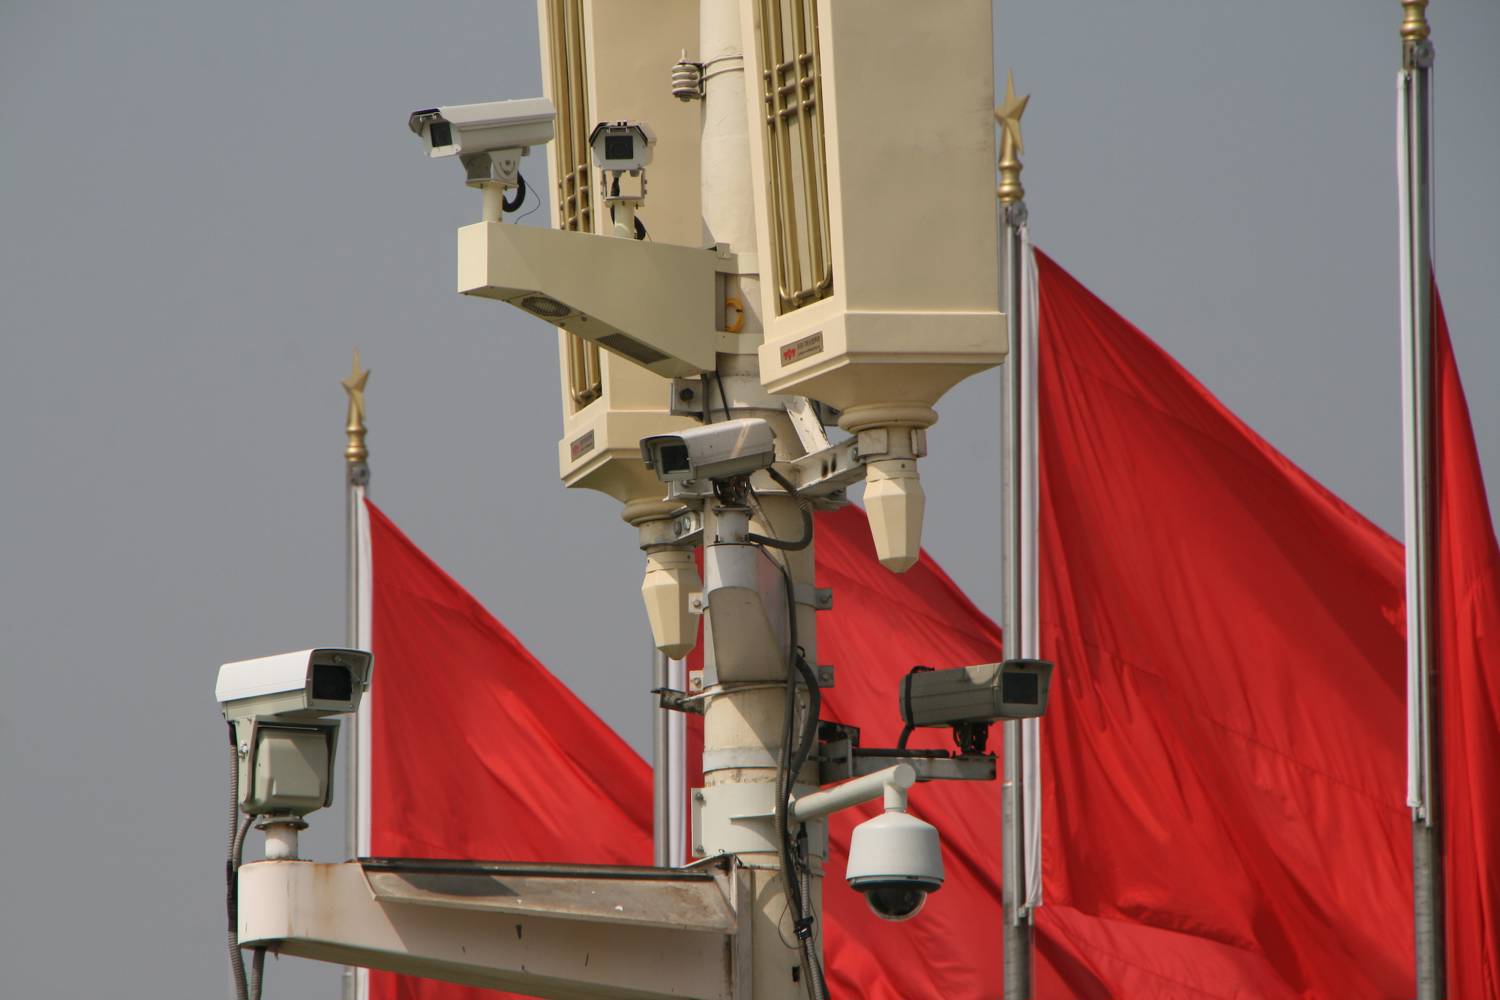 Surveillance in Tiananmen Square. Photo: Jack Hynes via Flickr / CC BY-NC-SA 2.0